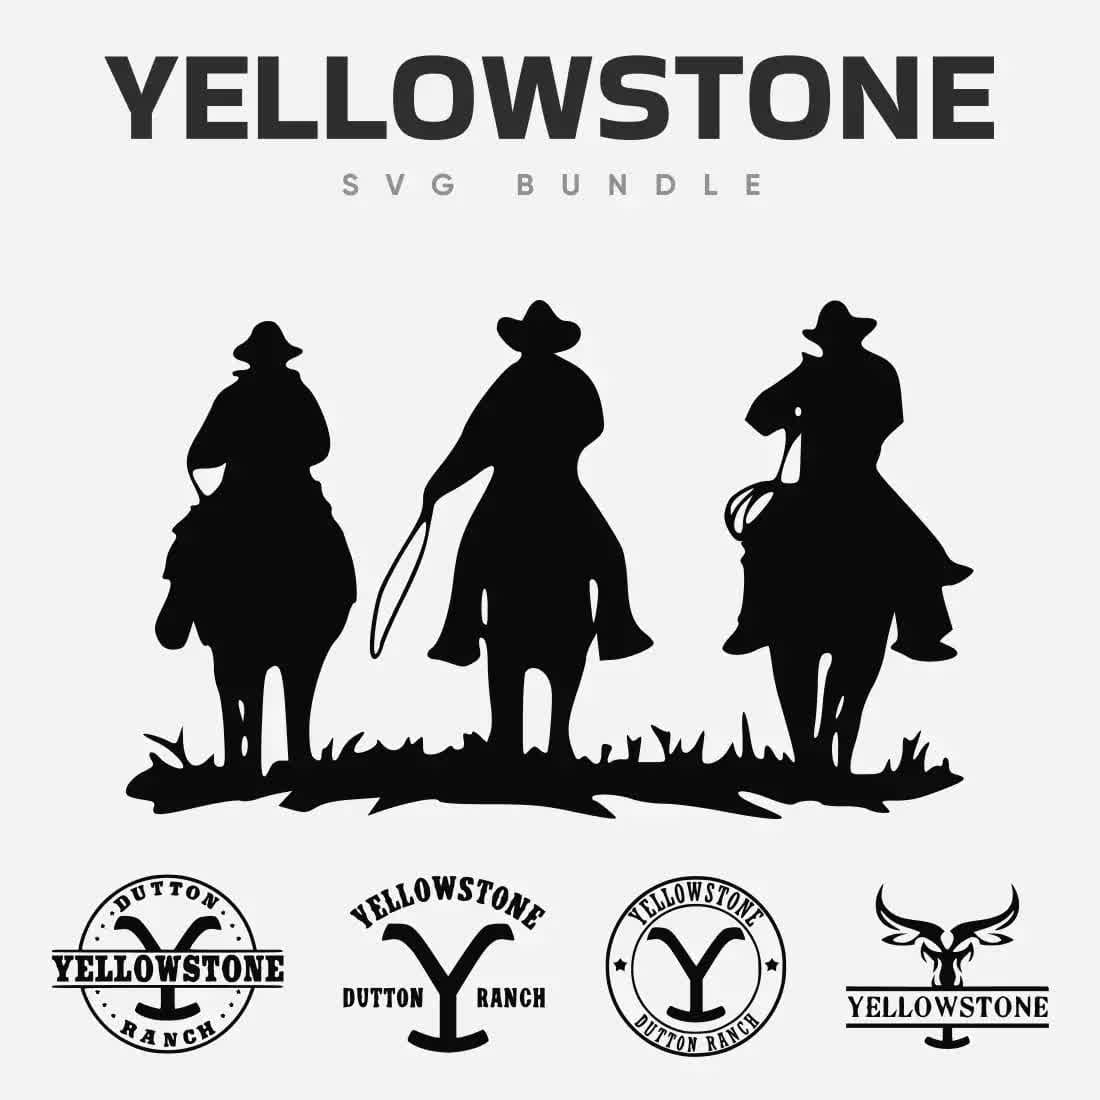 Yellowstone SVG Bundle Preview 5.